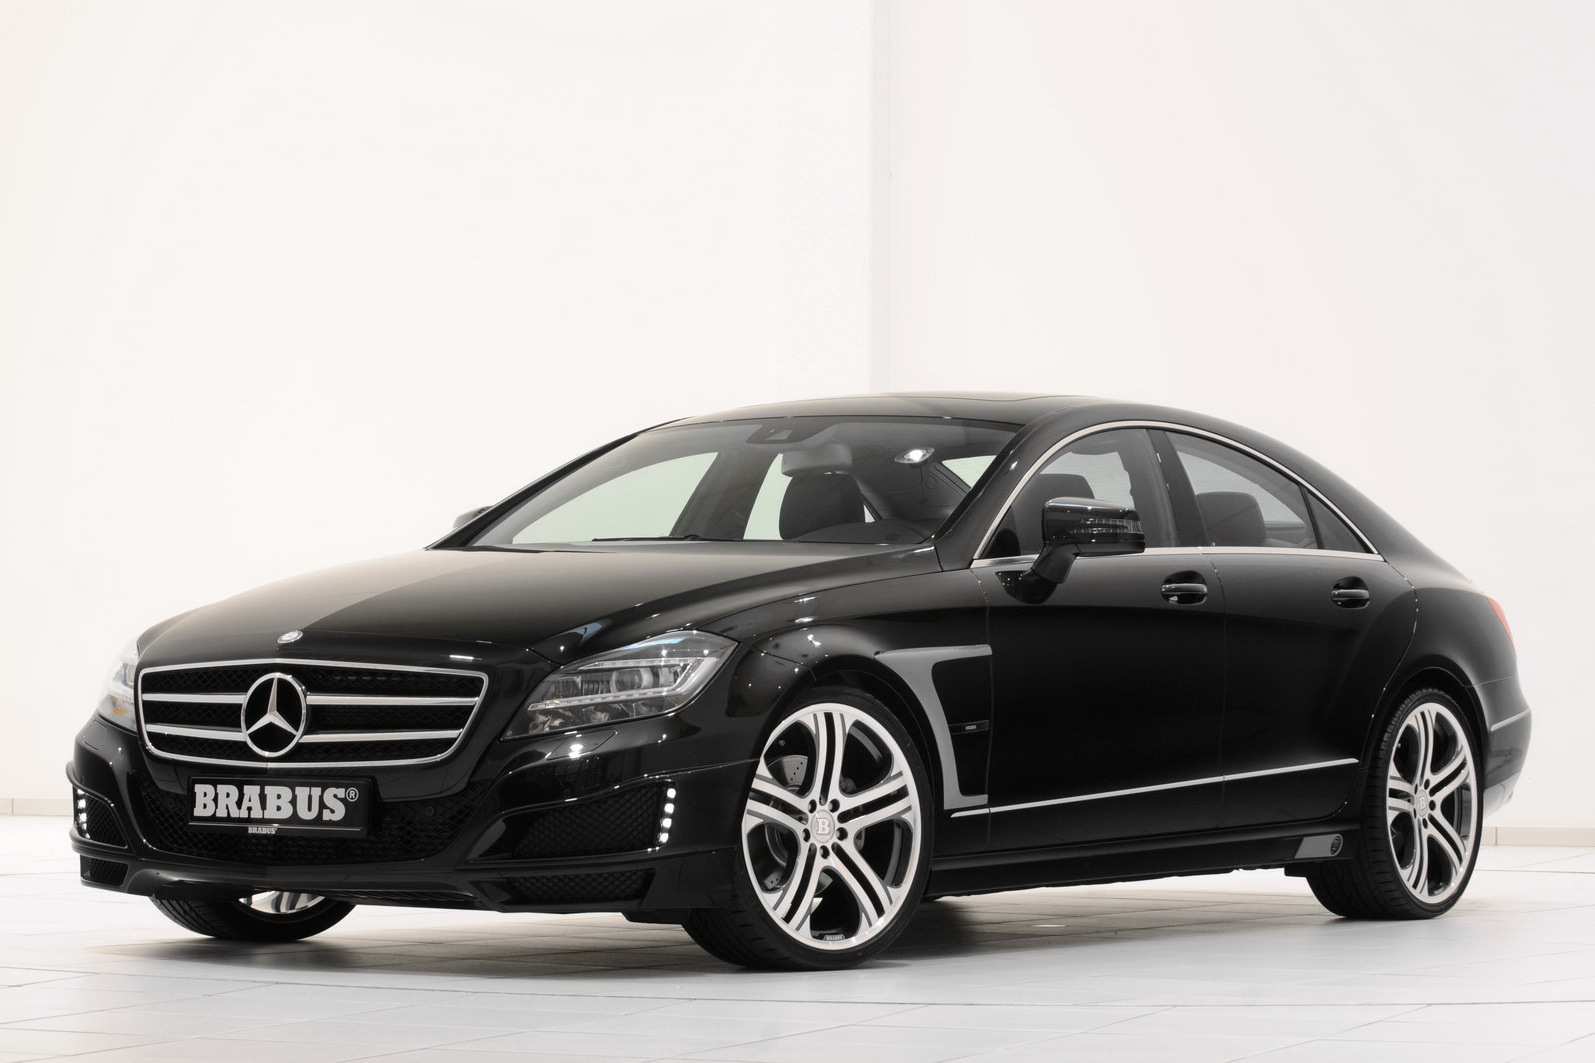 La Geneva 2011, Brabus propune pentru Mercedes CLS un program de personalizare decent